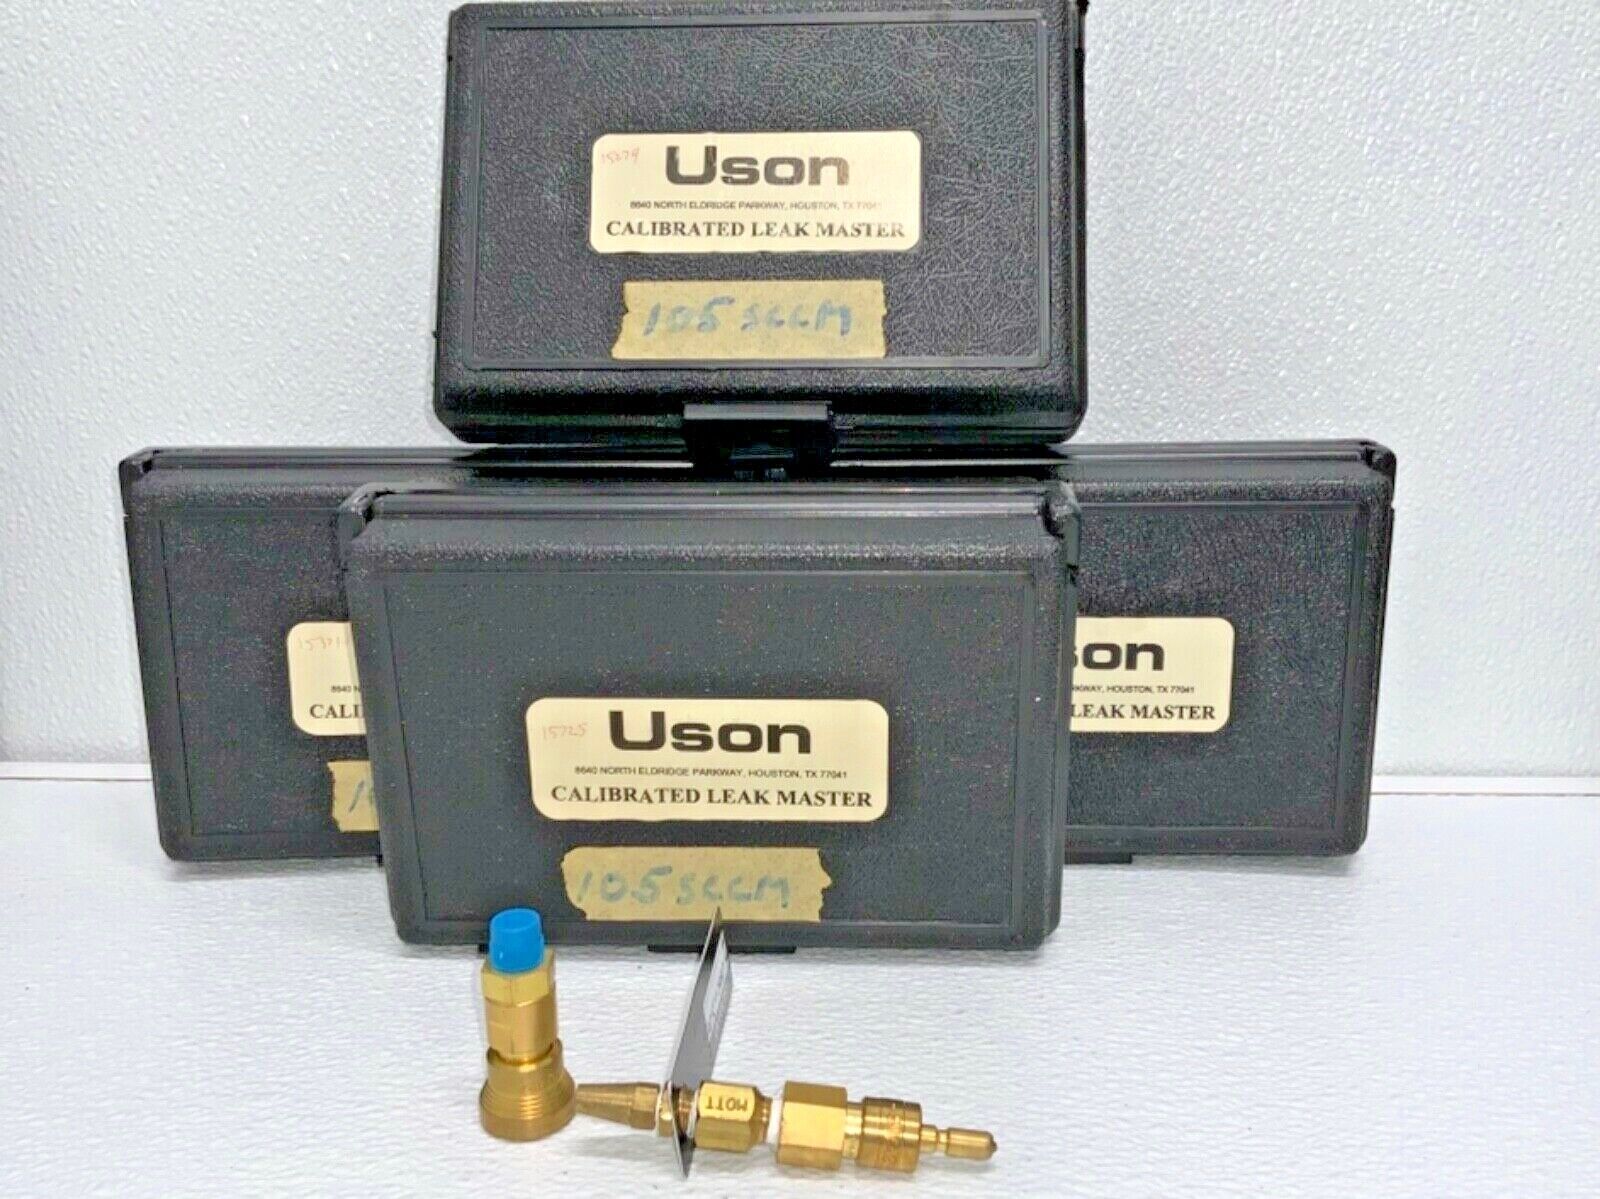 Uson Calibrated Leak Master Detector 105 SCCM 25 KPA Lot of 4 23C